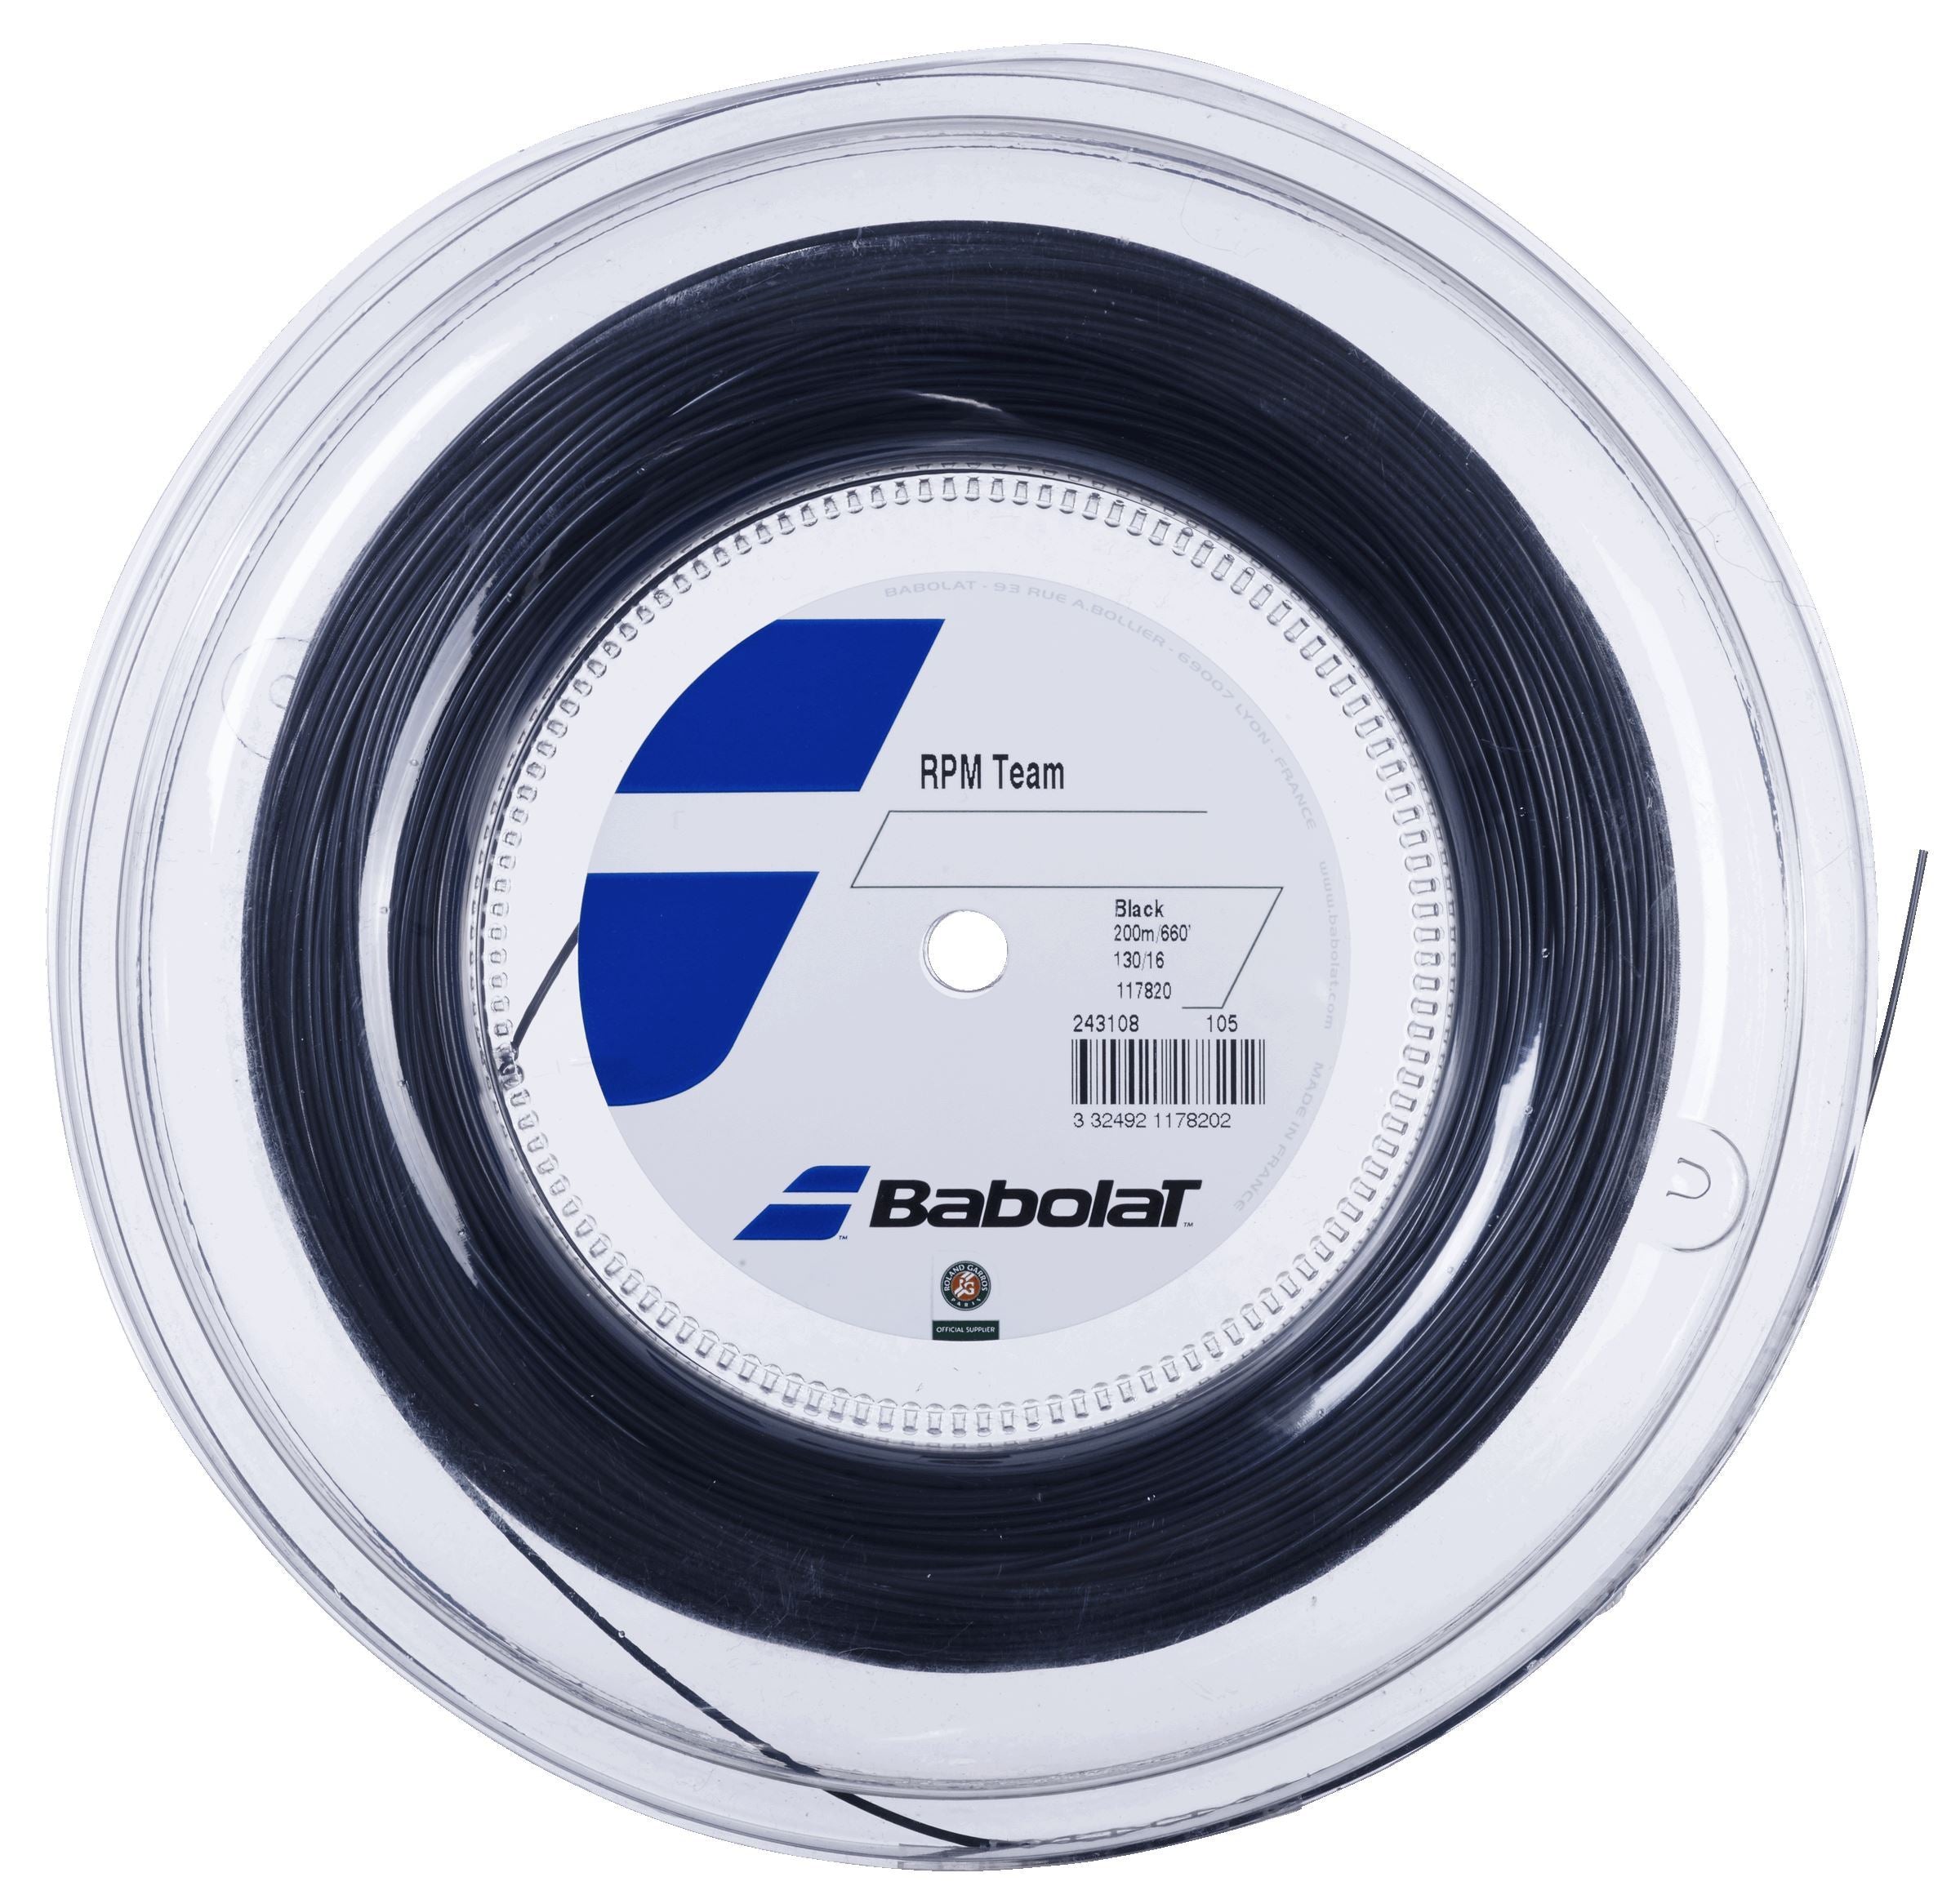 Babolat RPM Team 17g Black Tennis 200M/660 Feet String Reel